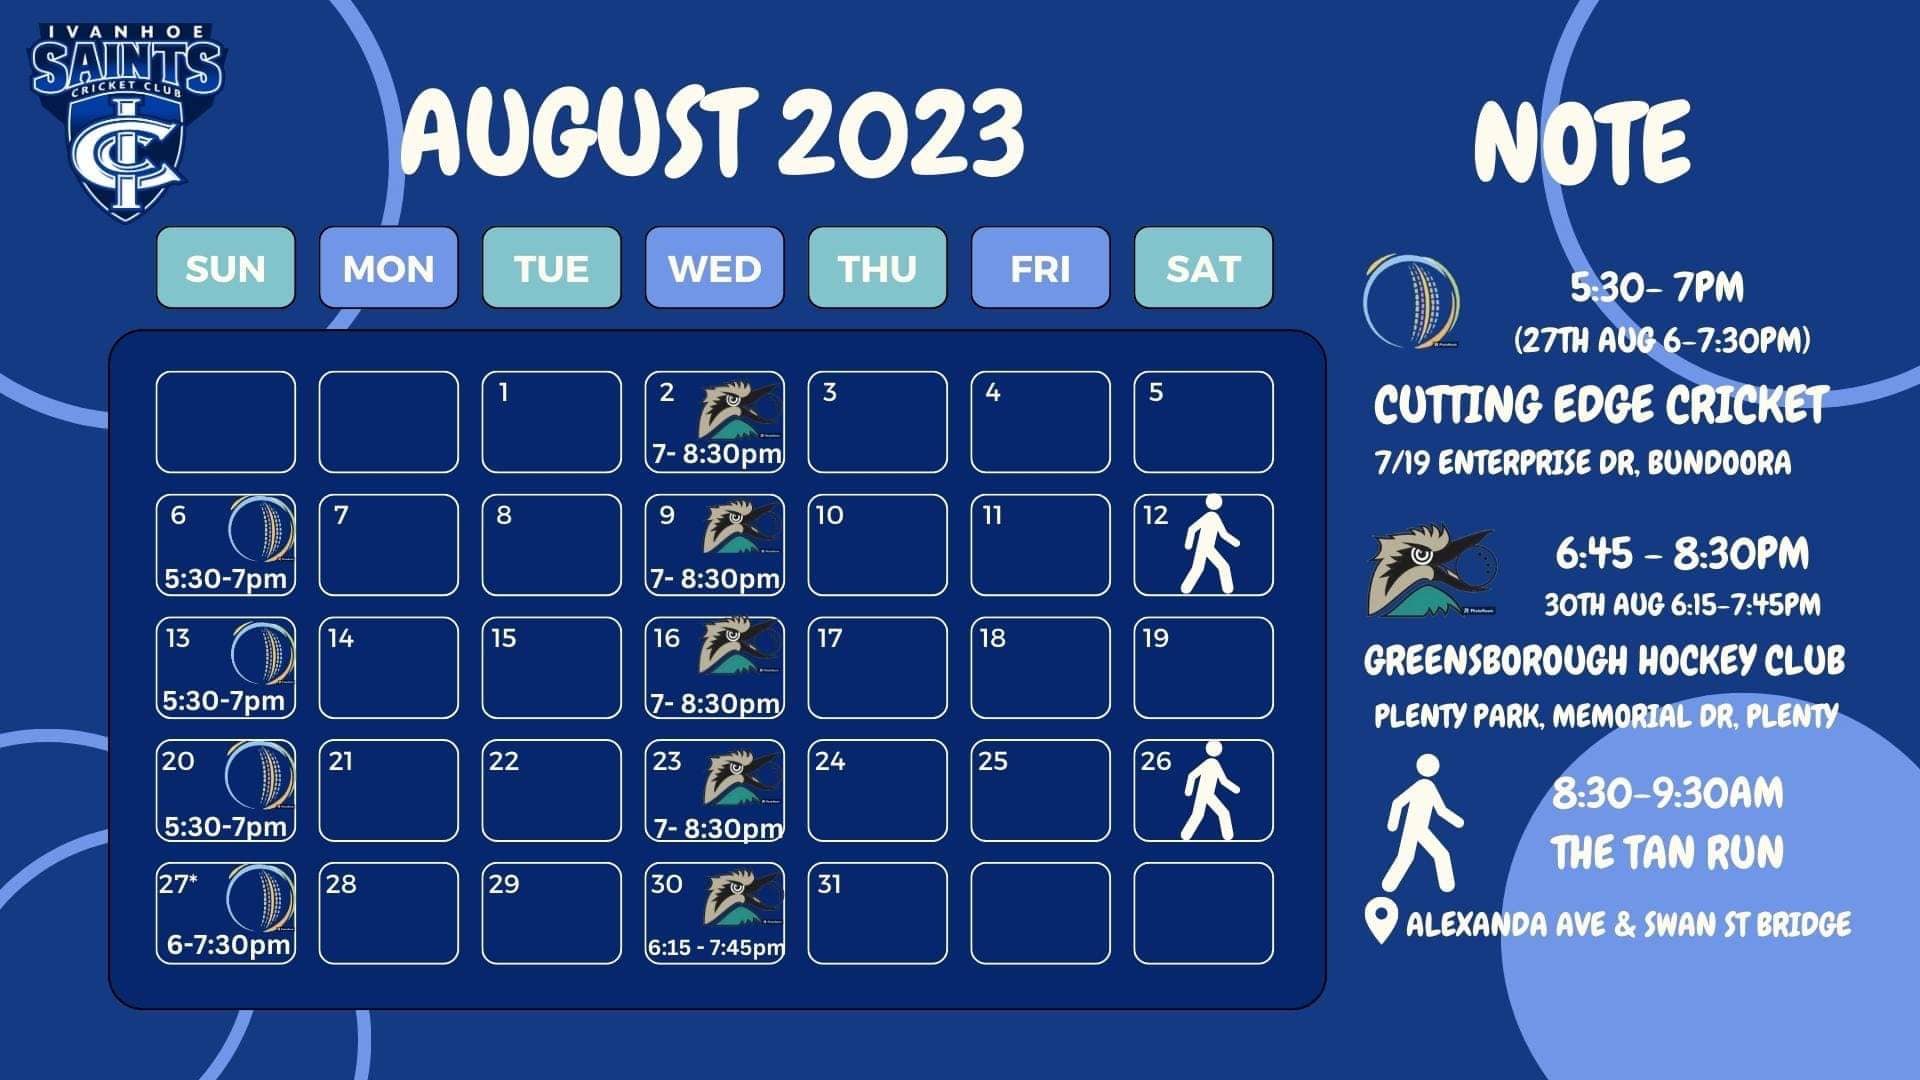 saints pre season schedule 2022